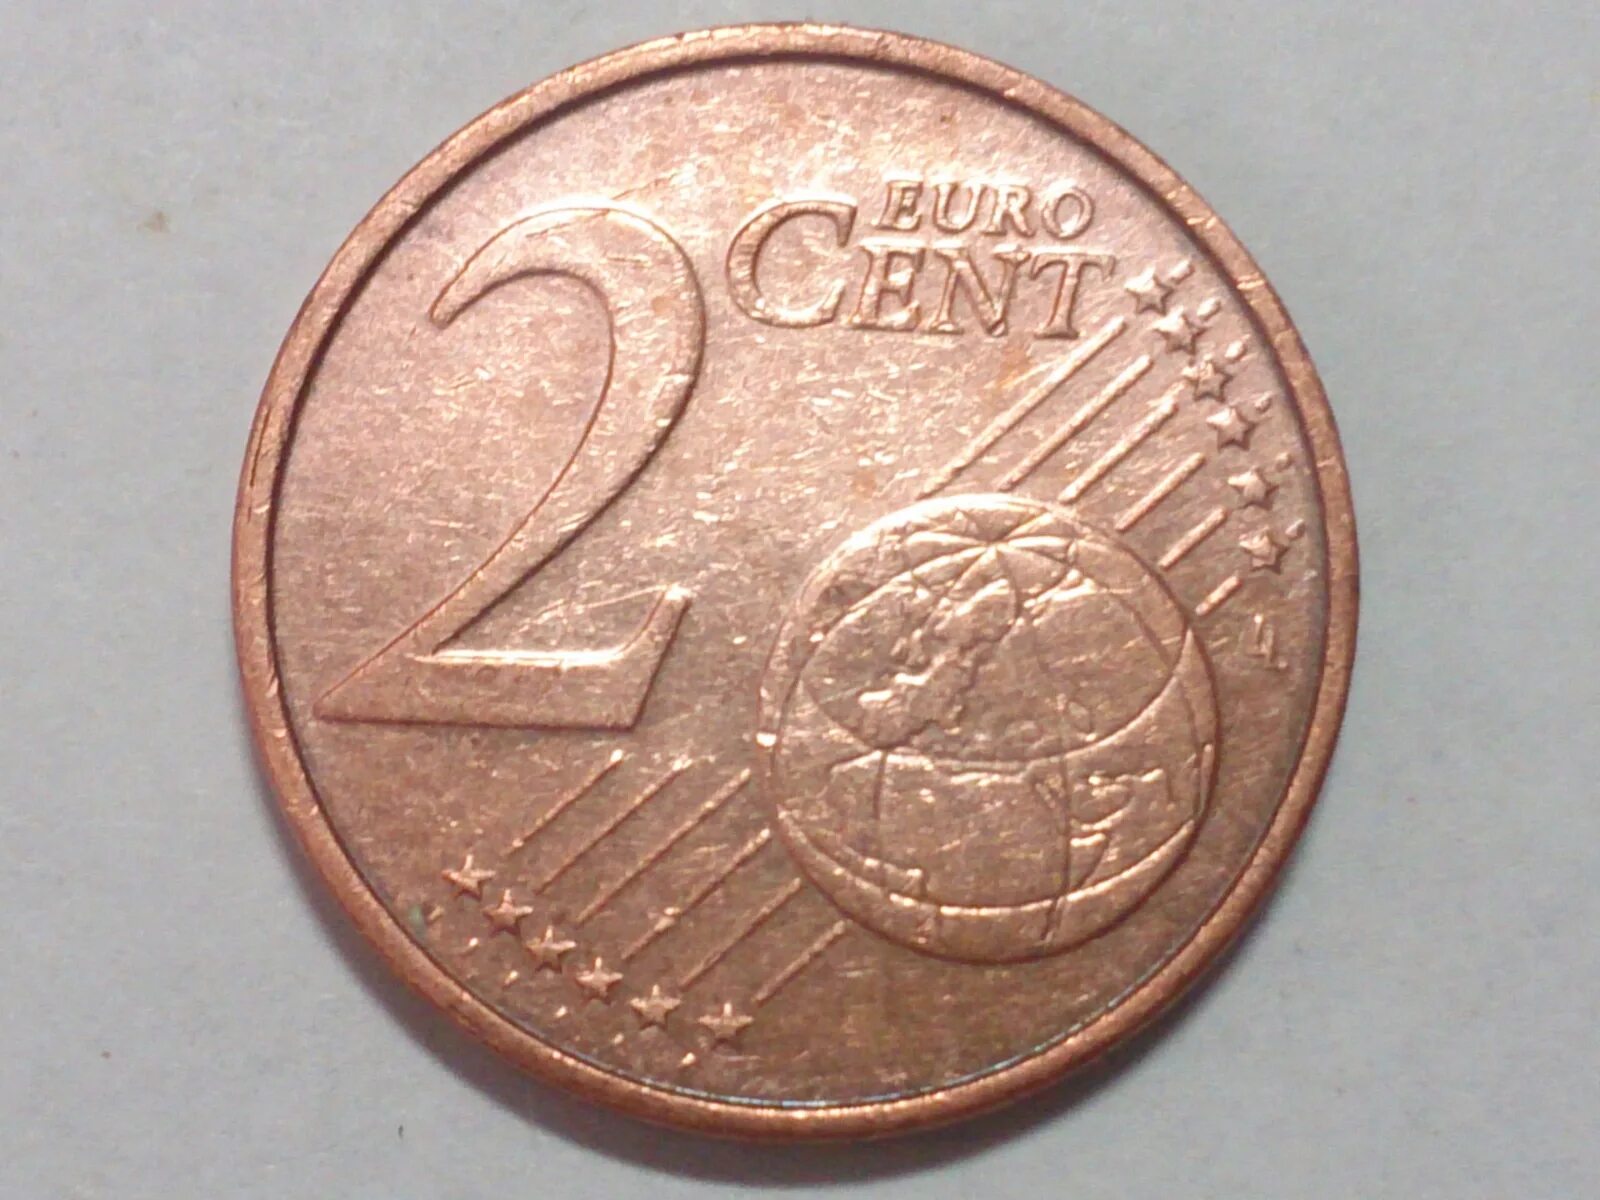 Центы в рубли. 2 Евро цента. Монета 10 Euro Cent 2010 HR cm. 2 Евроцента 2004 zwei Euro Cent. 1е цент 2010г Словения.